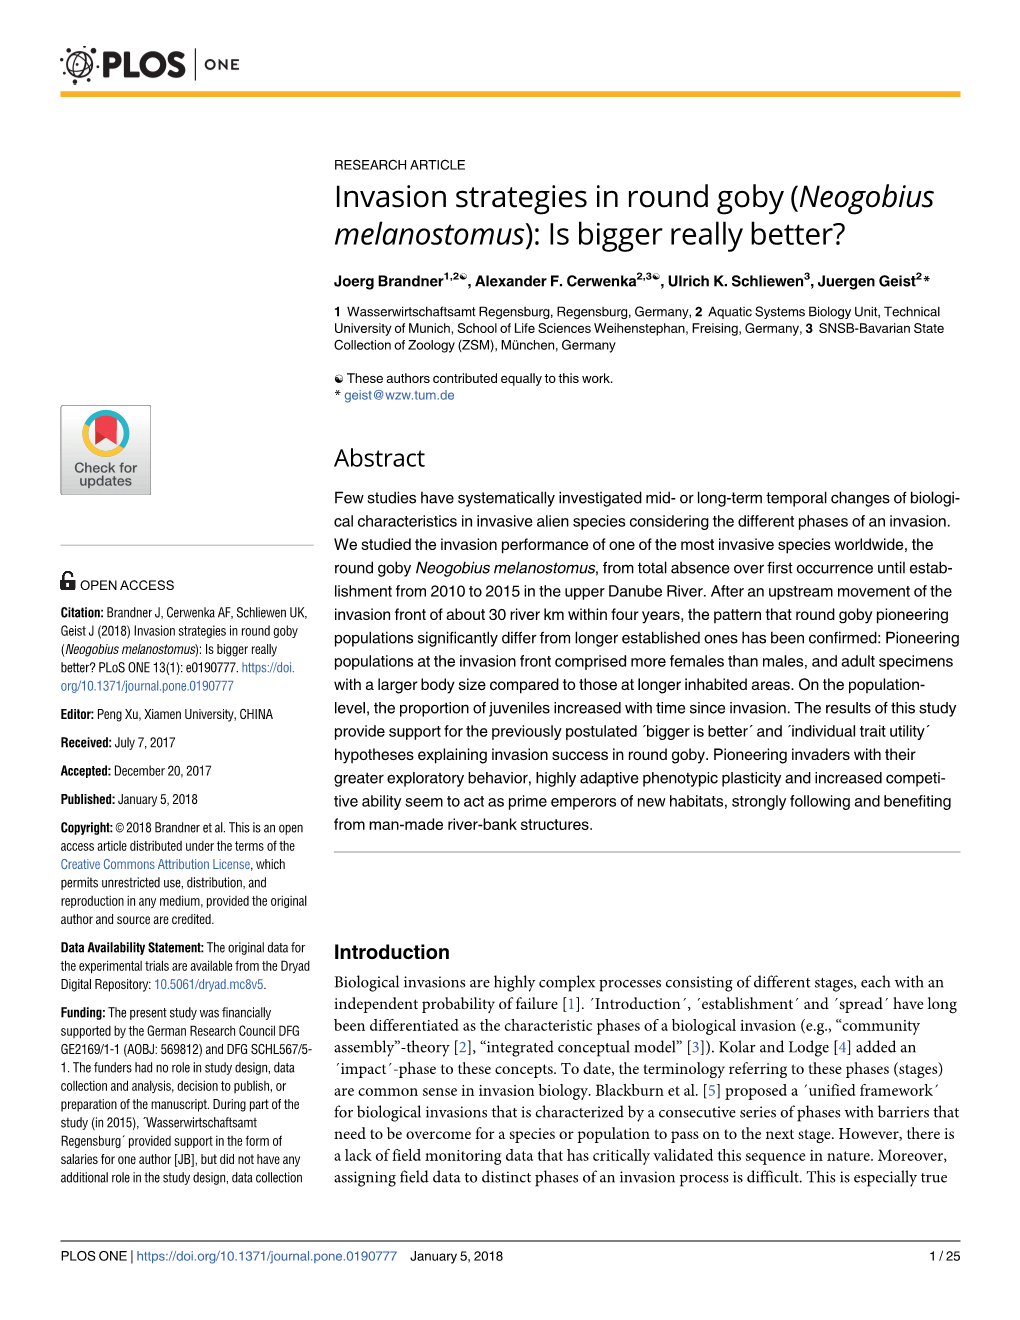 Invasion Strategies in Round Goby (Neogobius Melanostomus): Is Bigger Really Better?